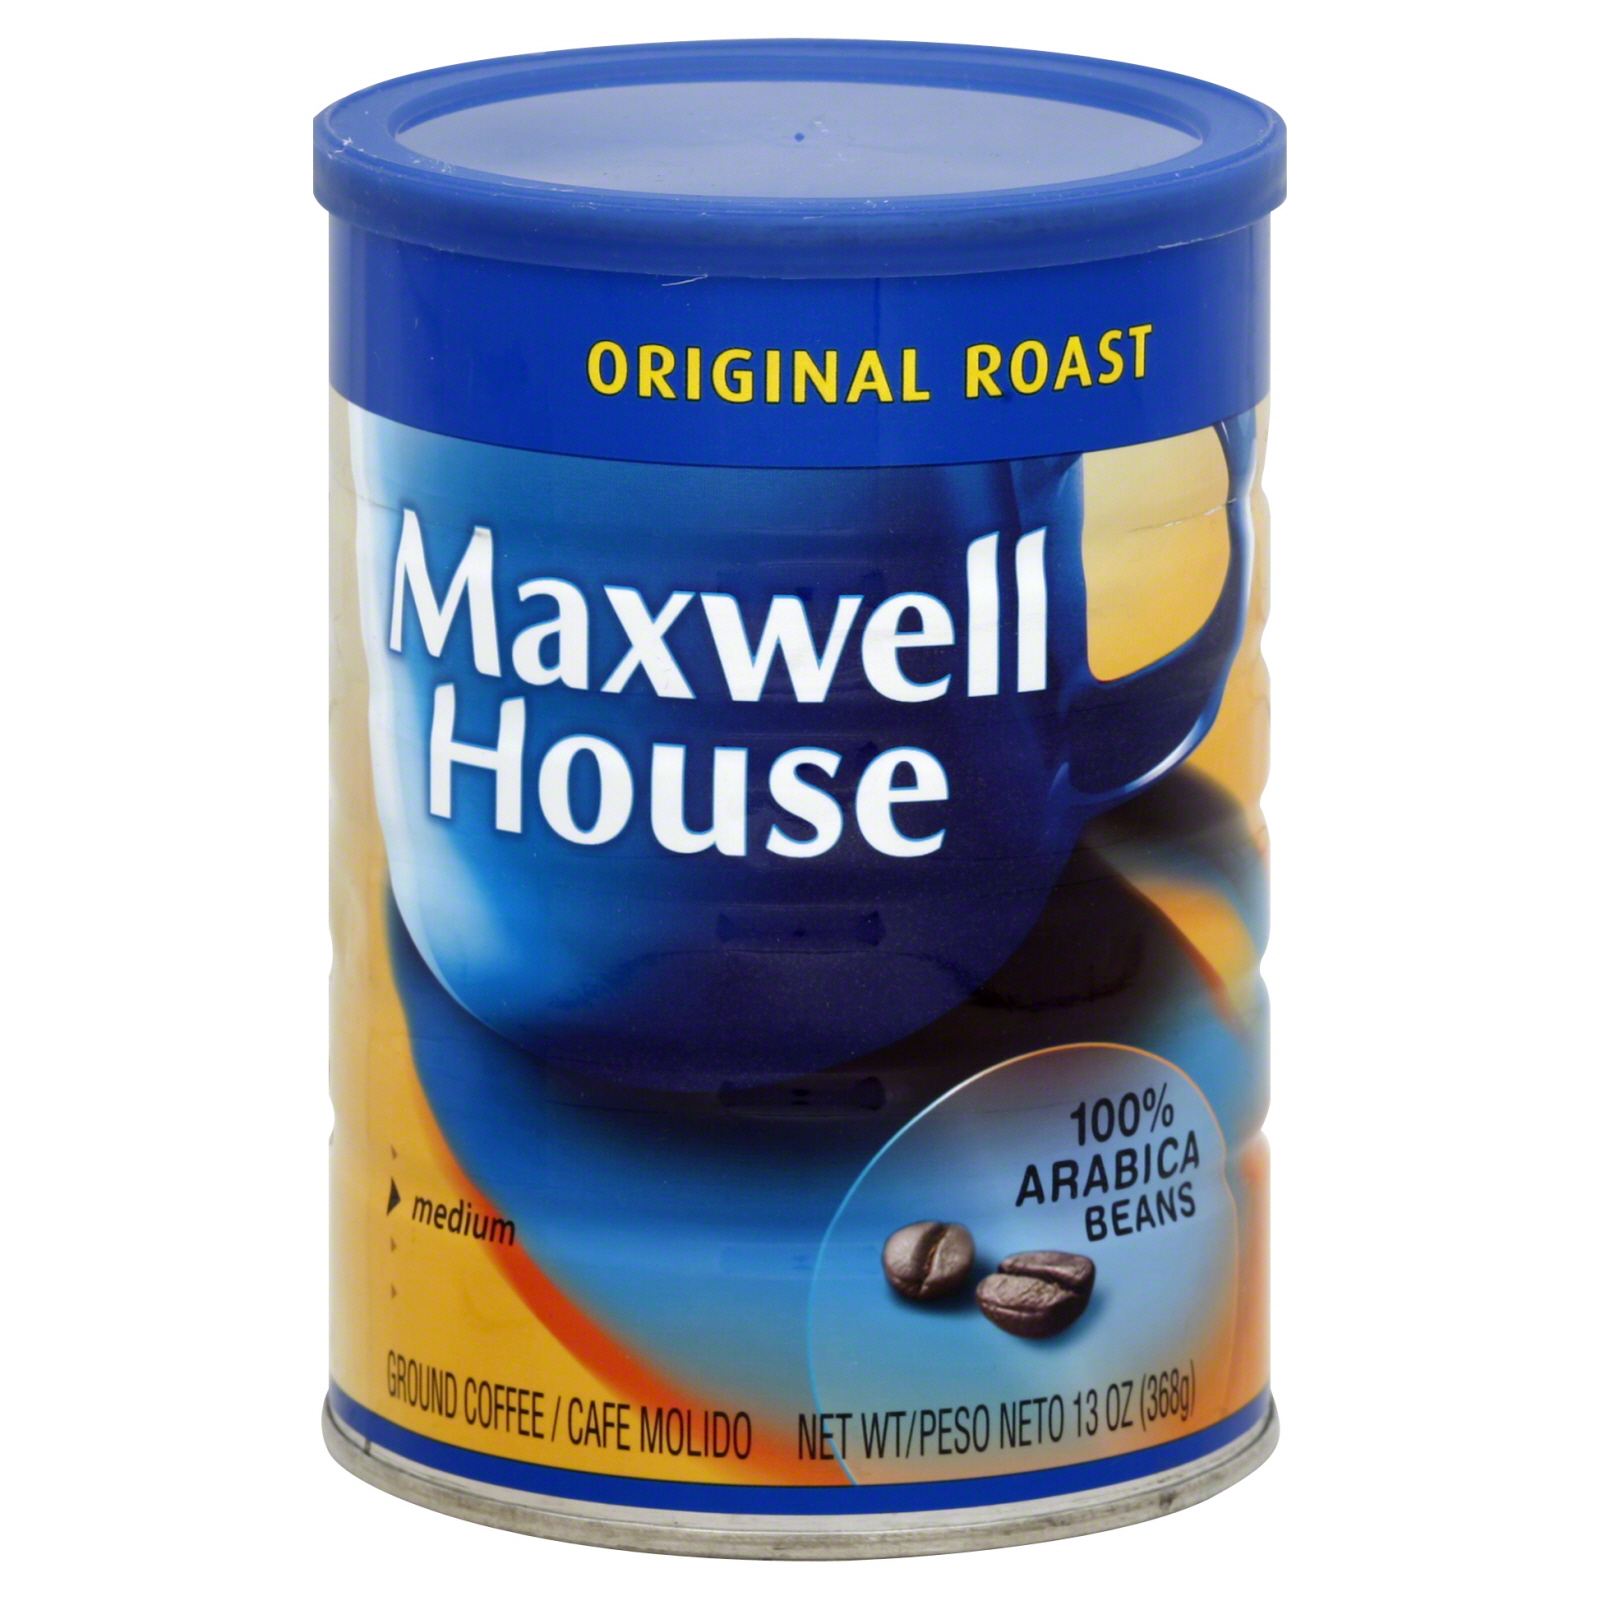 Maxwell House Coffee, Ground, Original Roast, Medium, 13 oz (368 g)